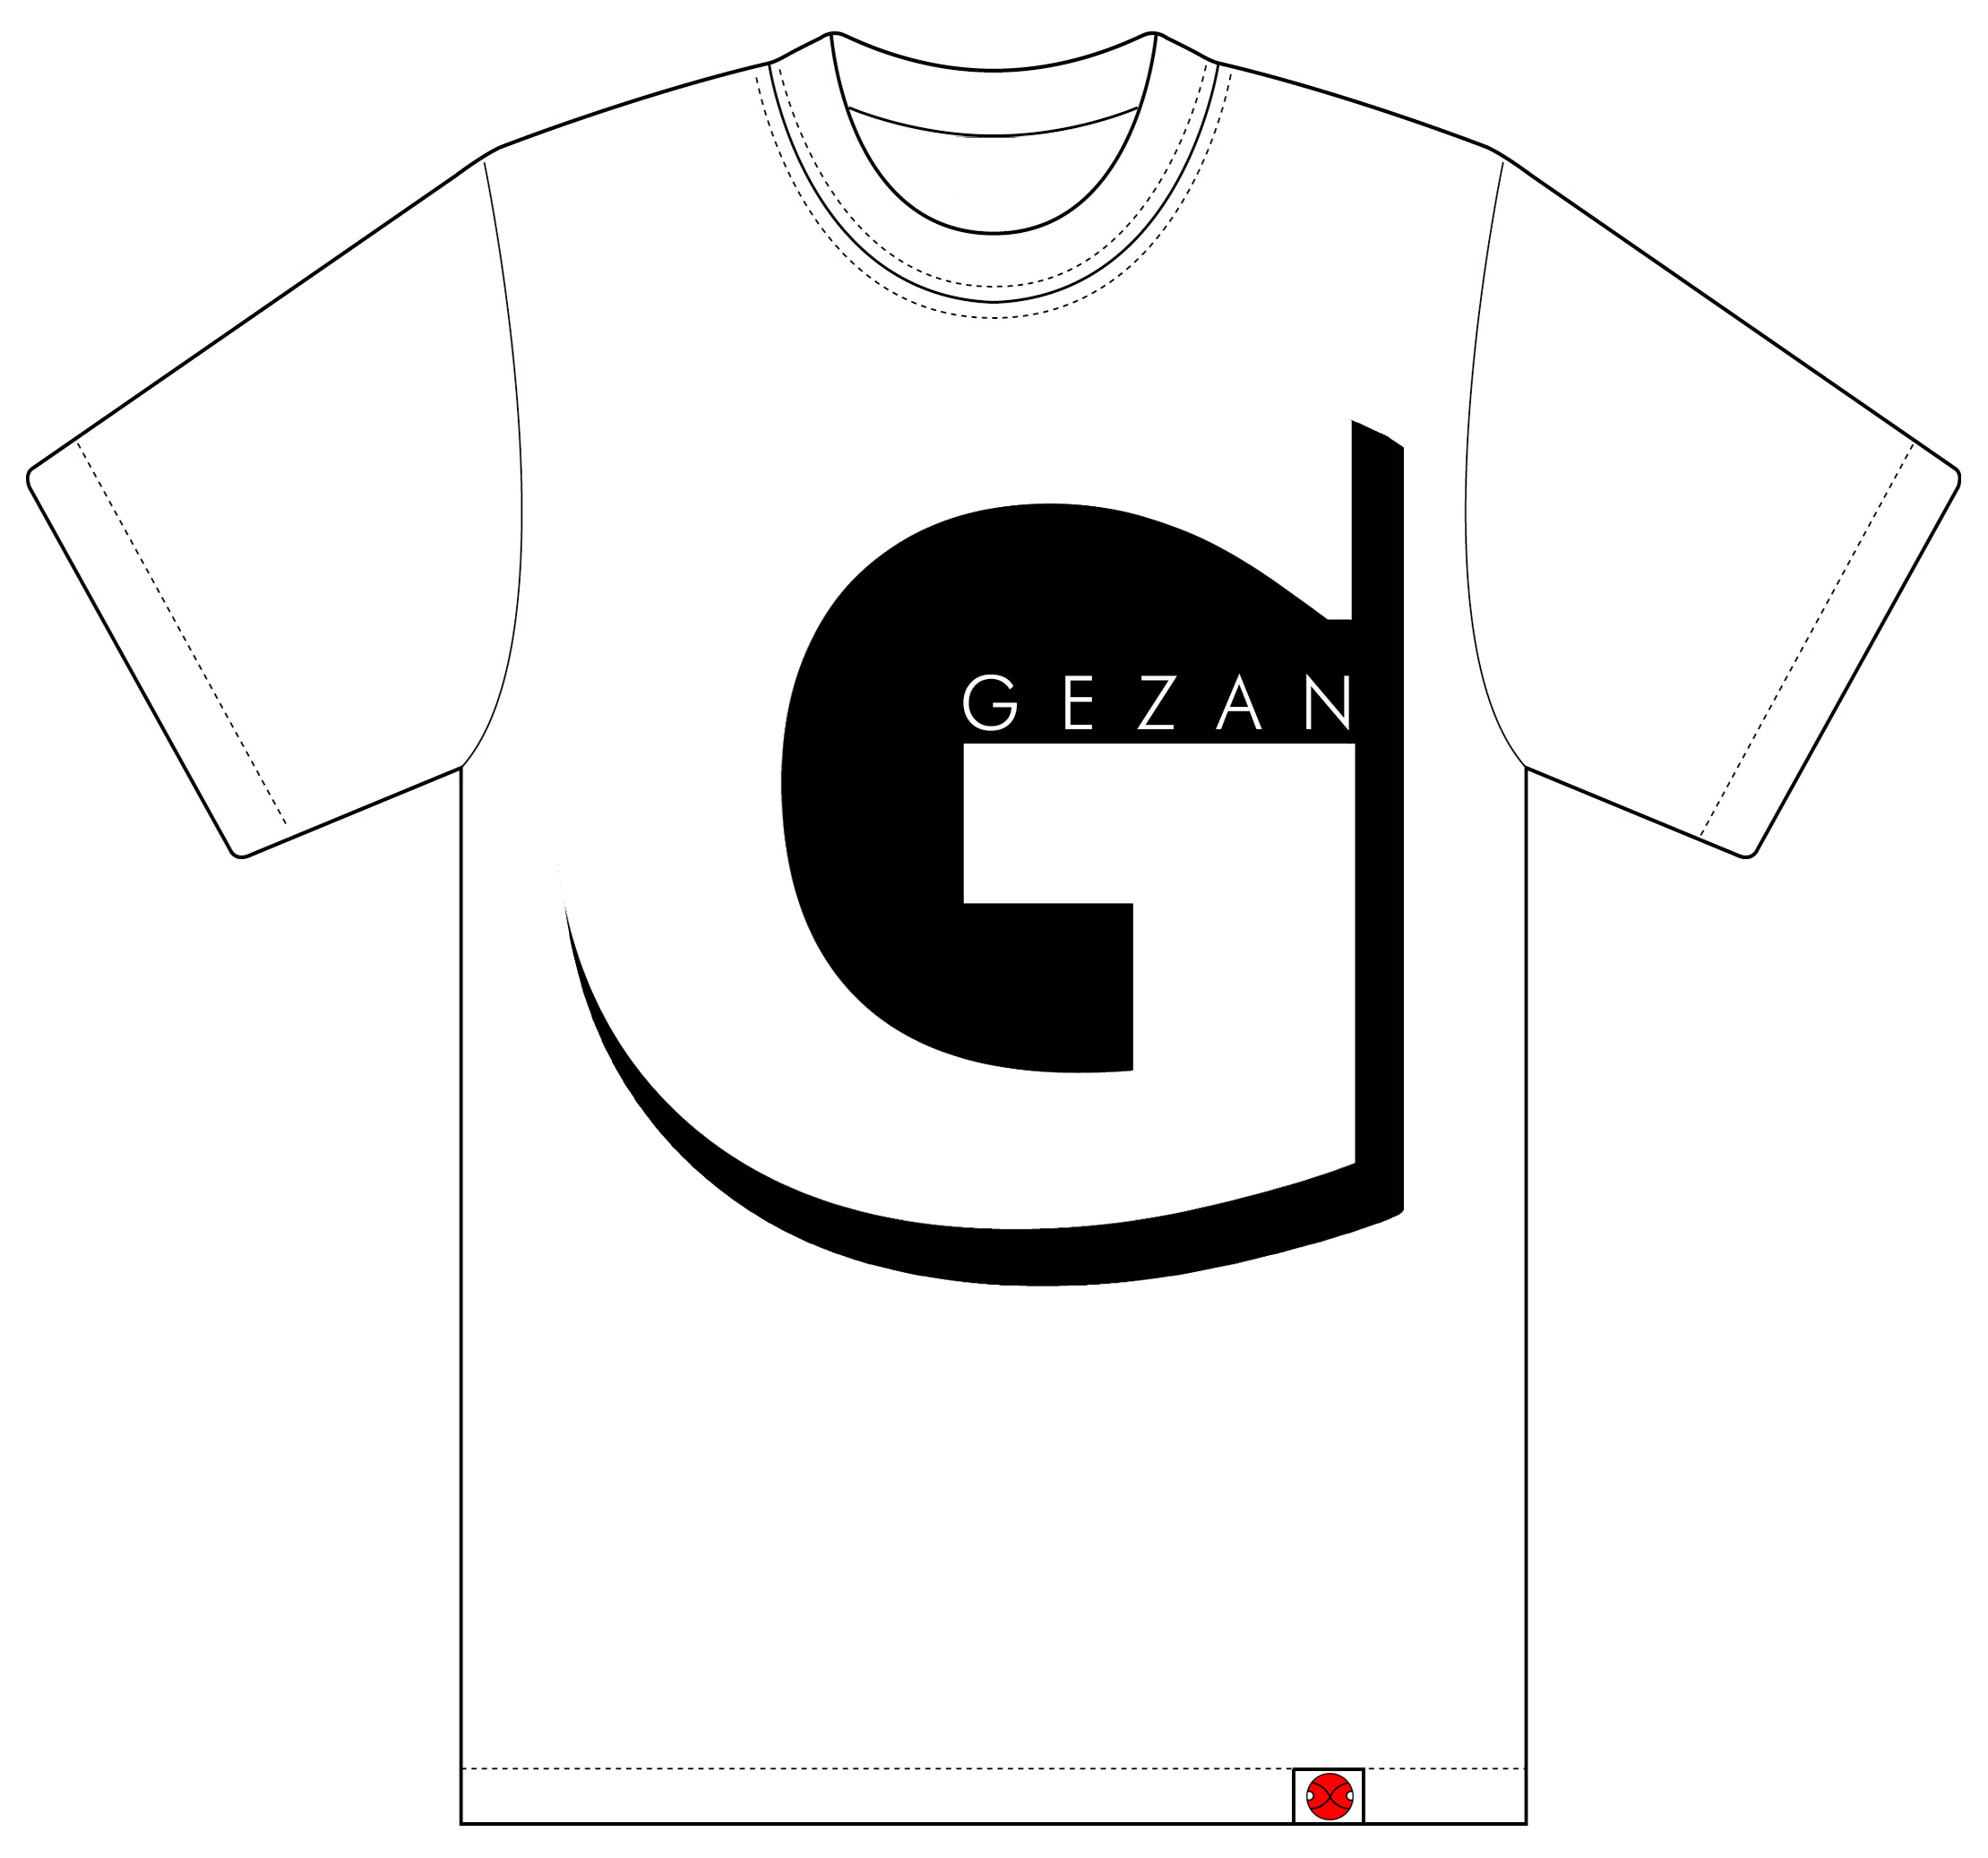 NEW GEZAN 『BIG G』T-shirts 発売